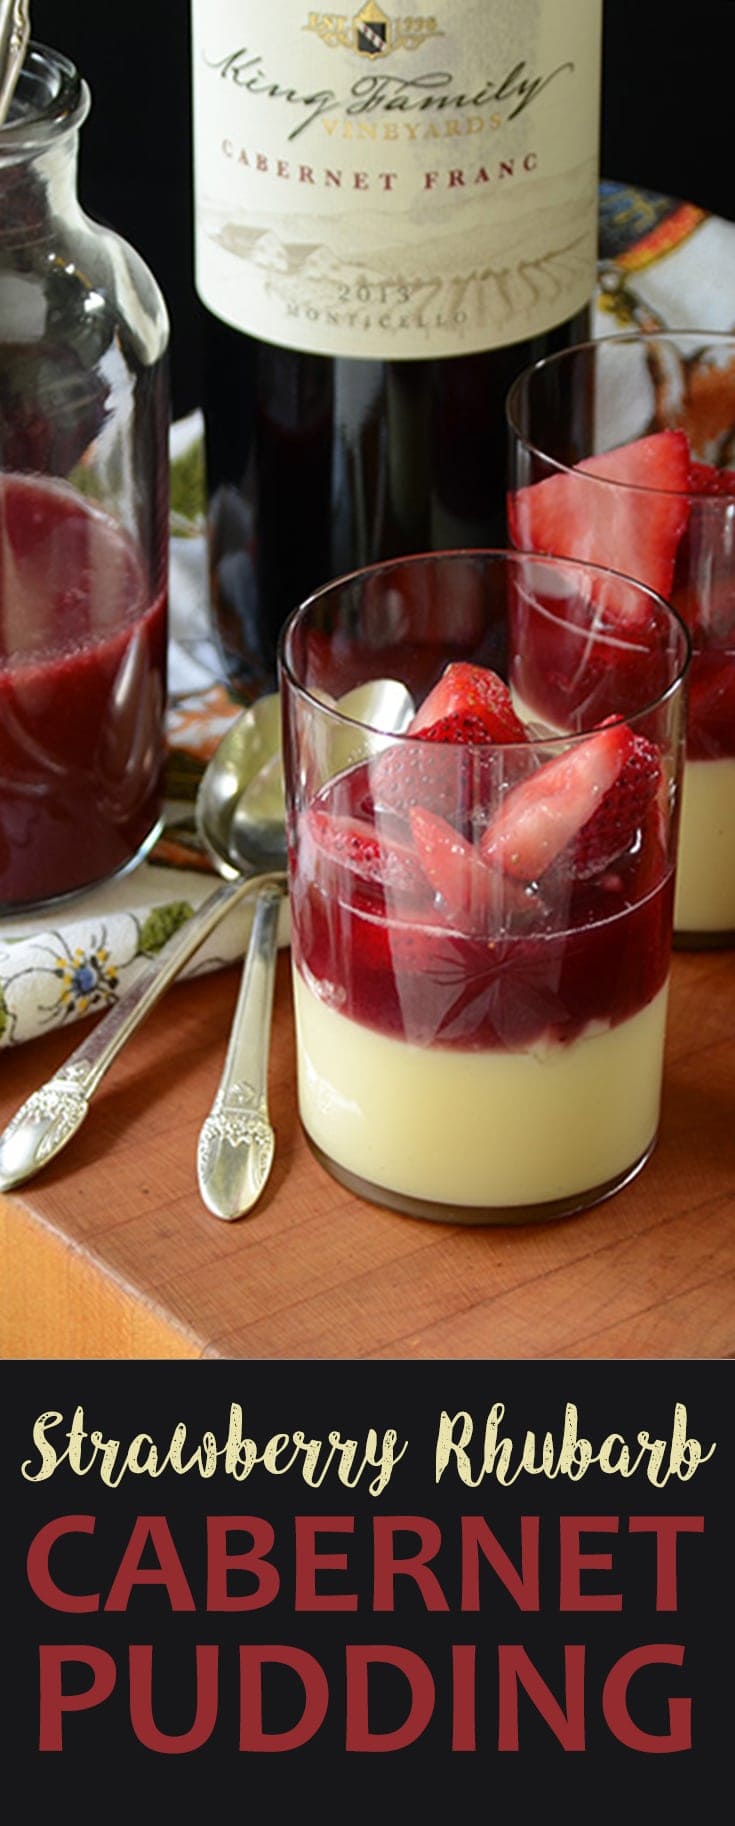 Strawberry Rhubarb Pudding - Elegant Cabernet Strawberry Rhubarb Pudding